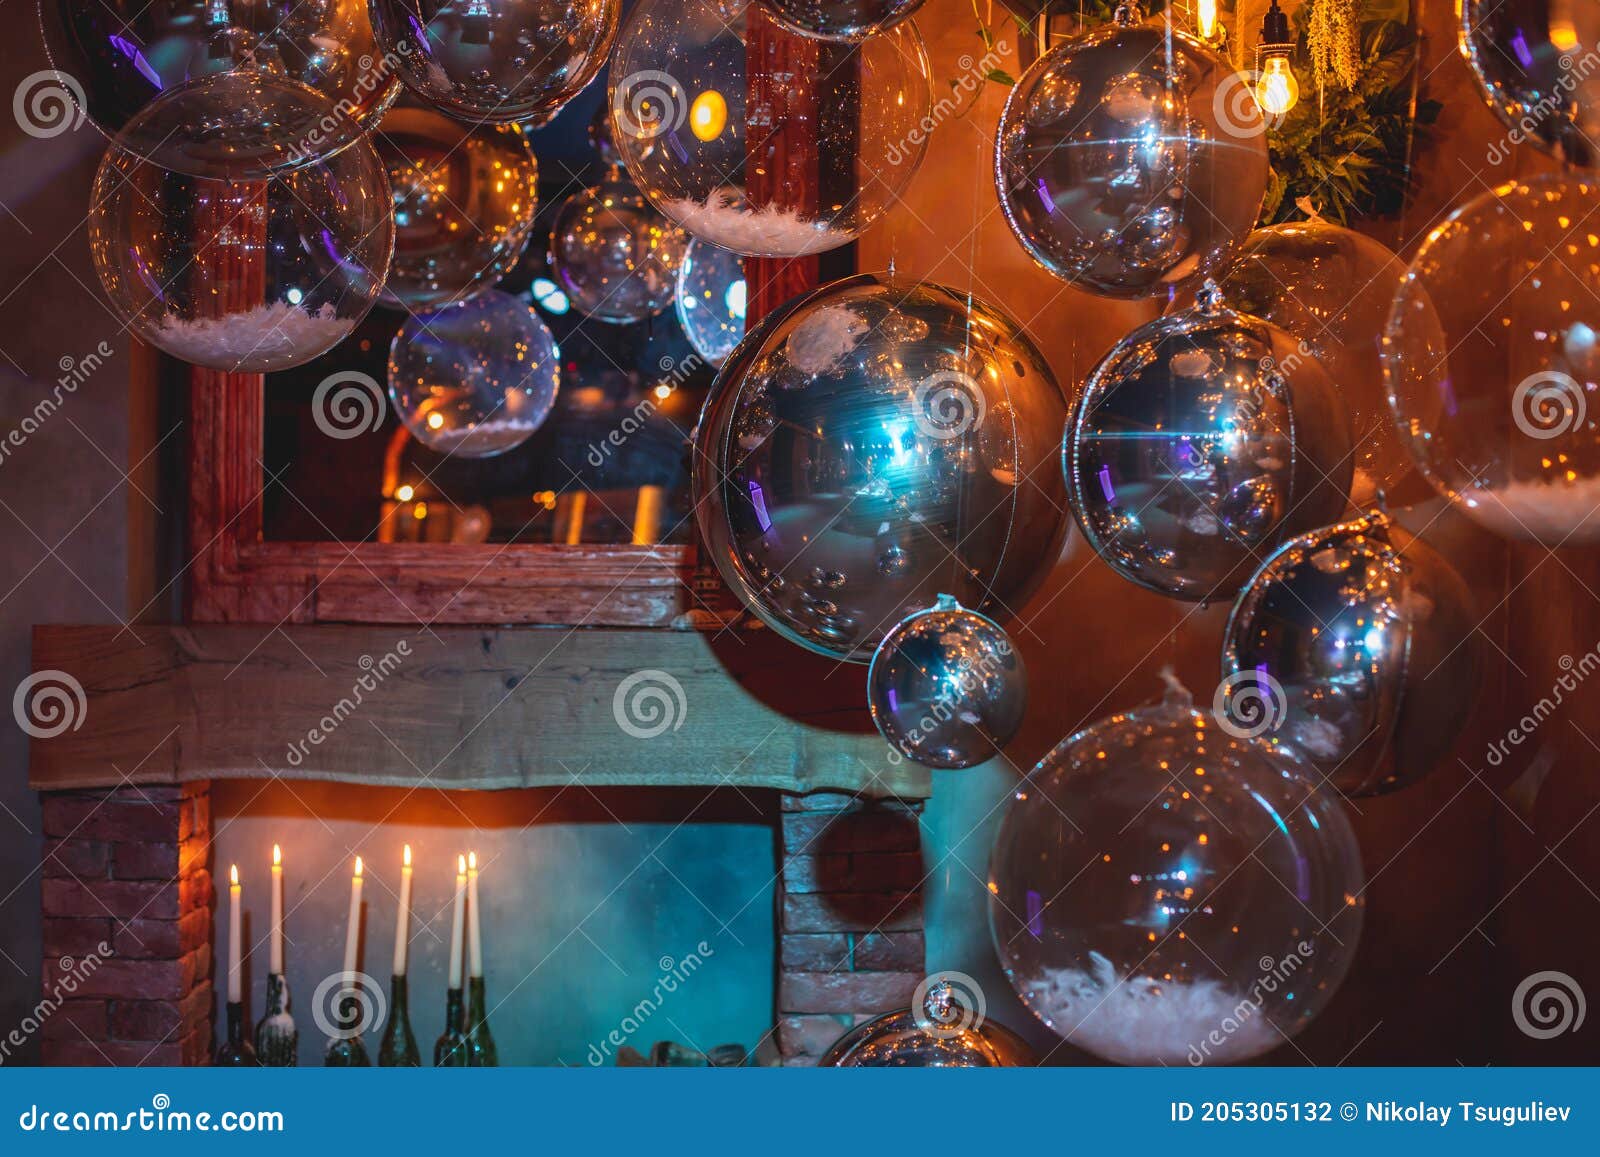 Decoration Interior Elements of Restaurant Venue Banquet Hall with ...